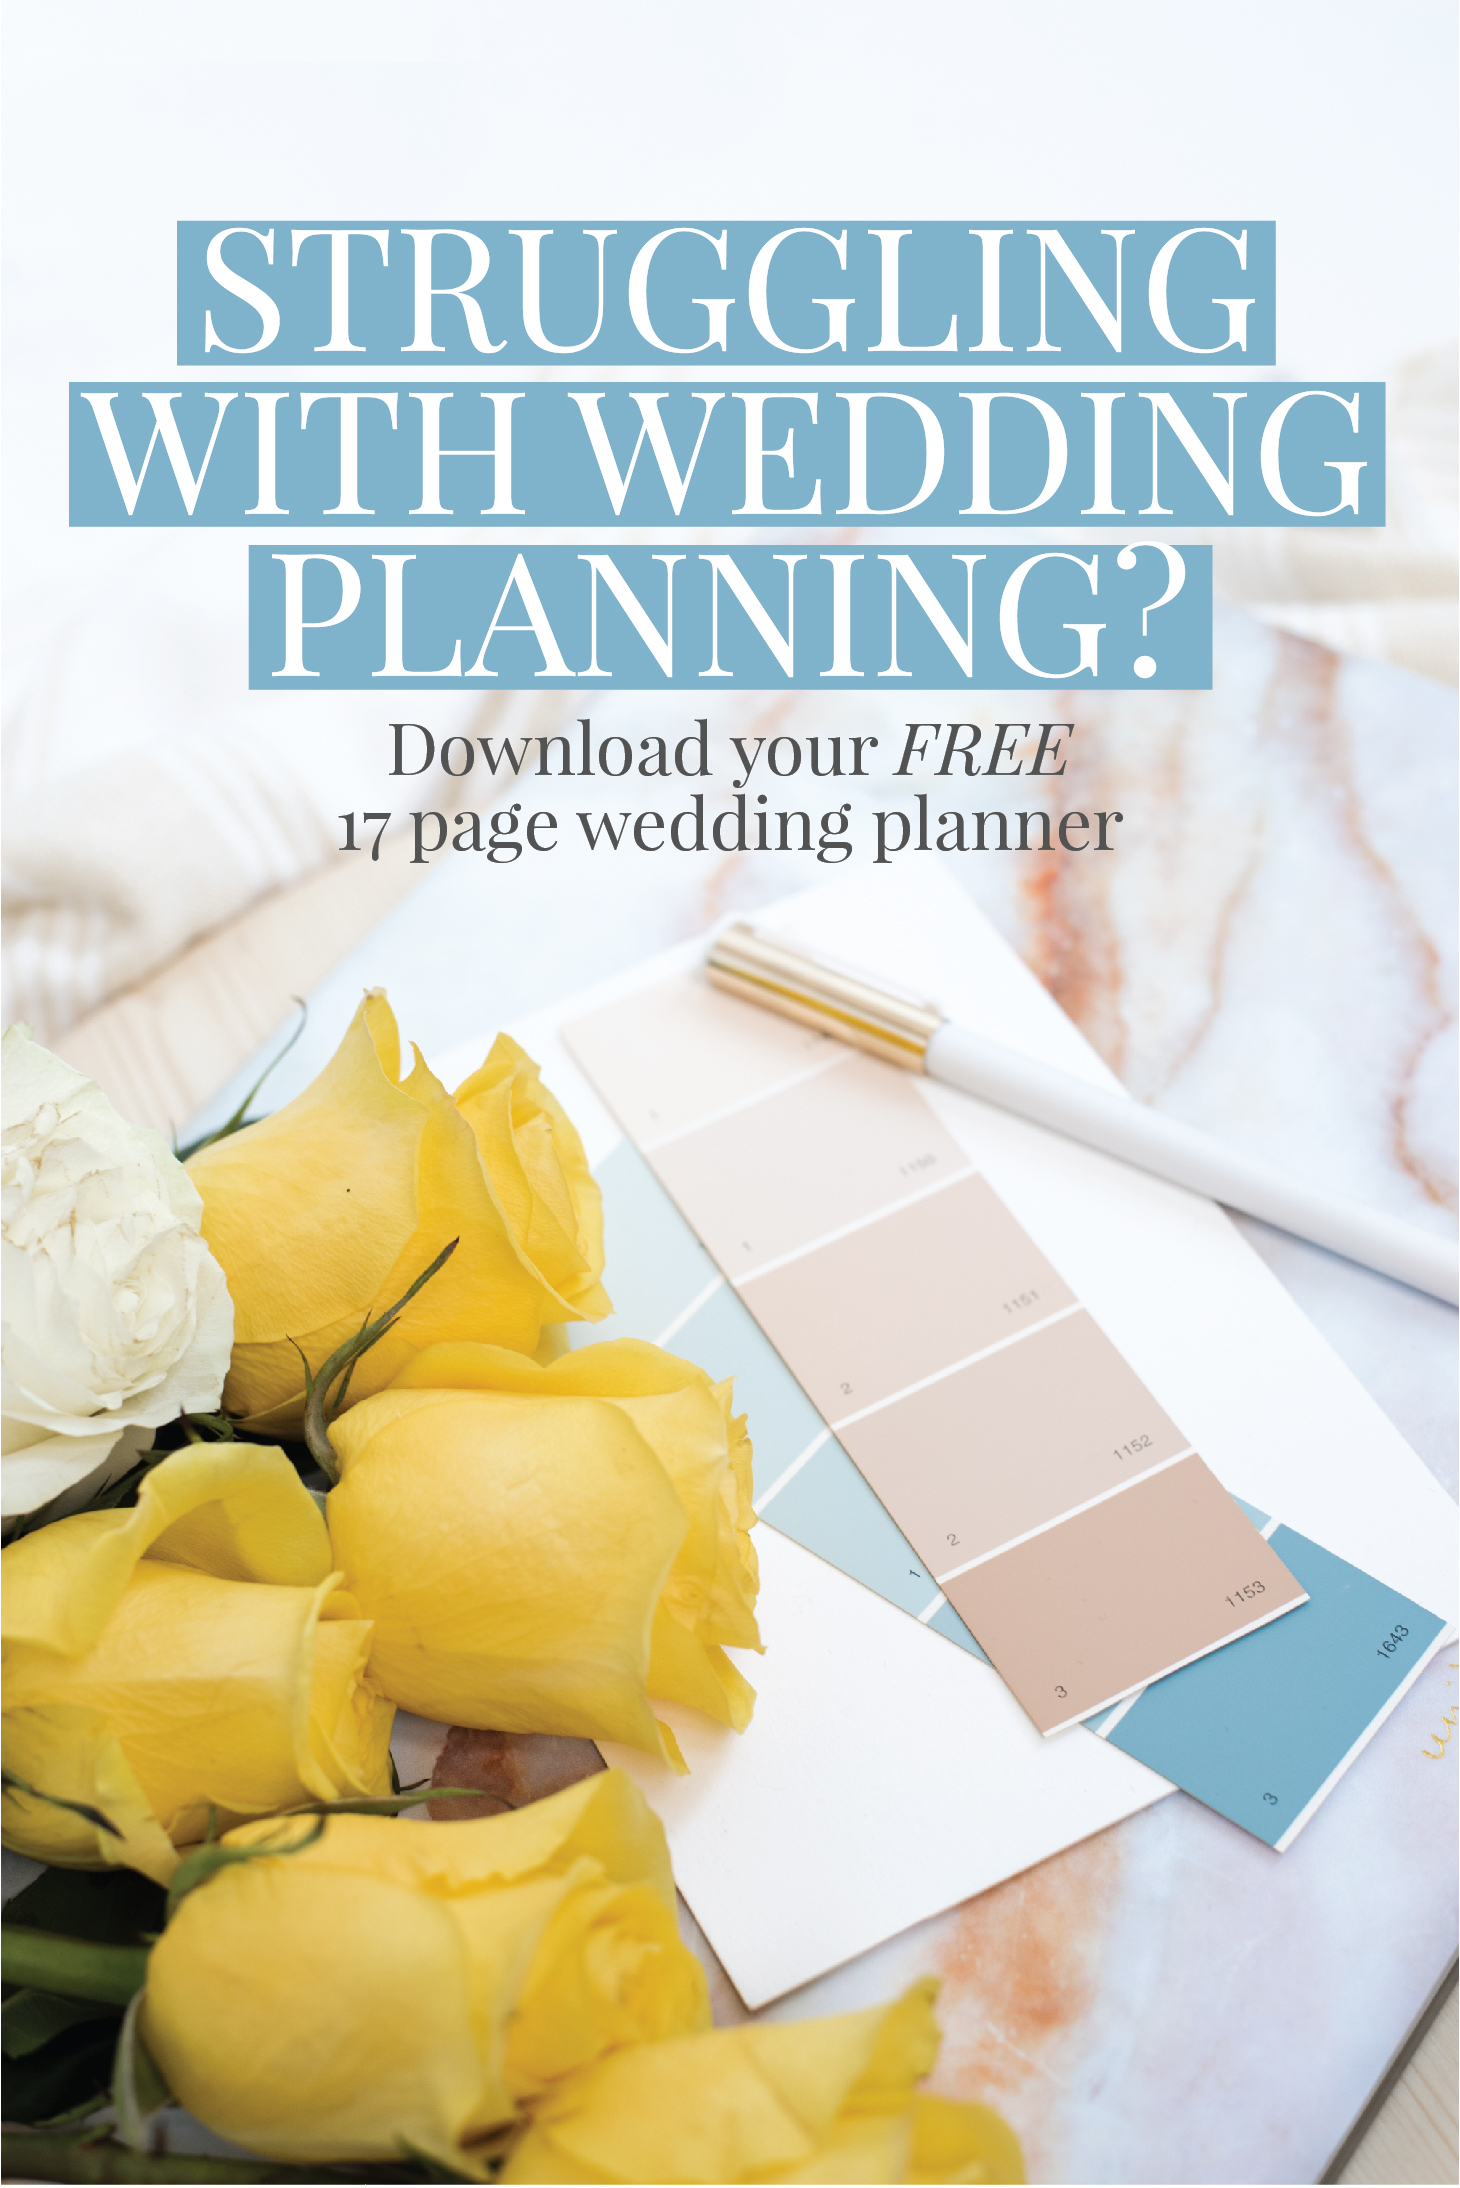 Struggling-with-wedding-planning-01.jpg